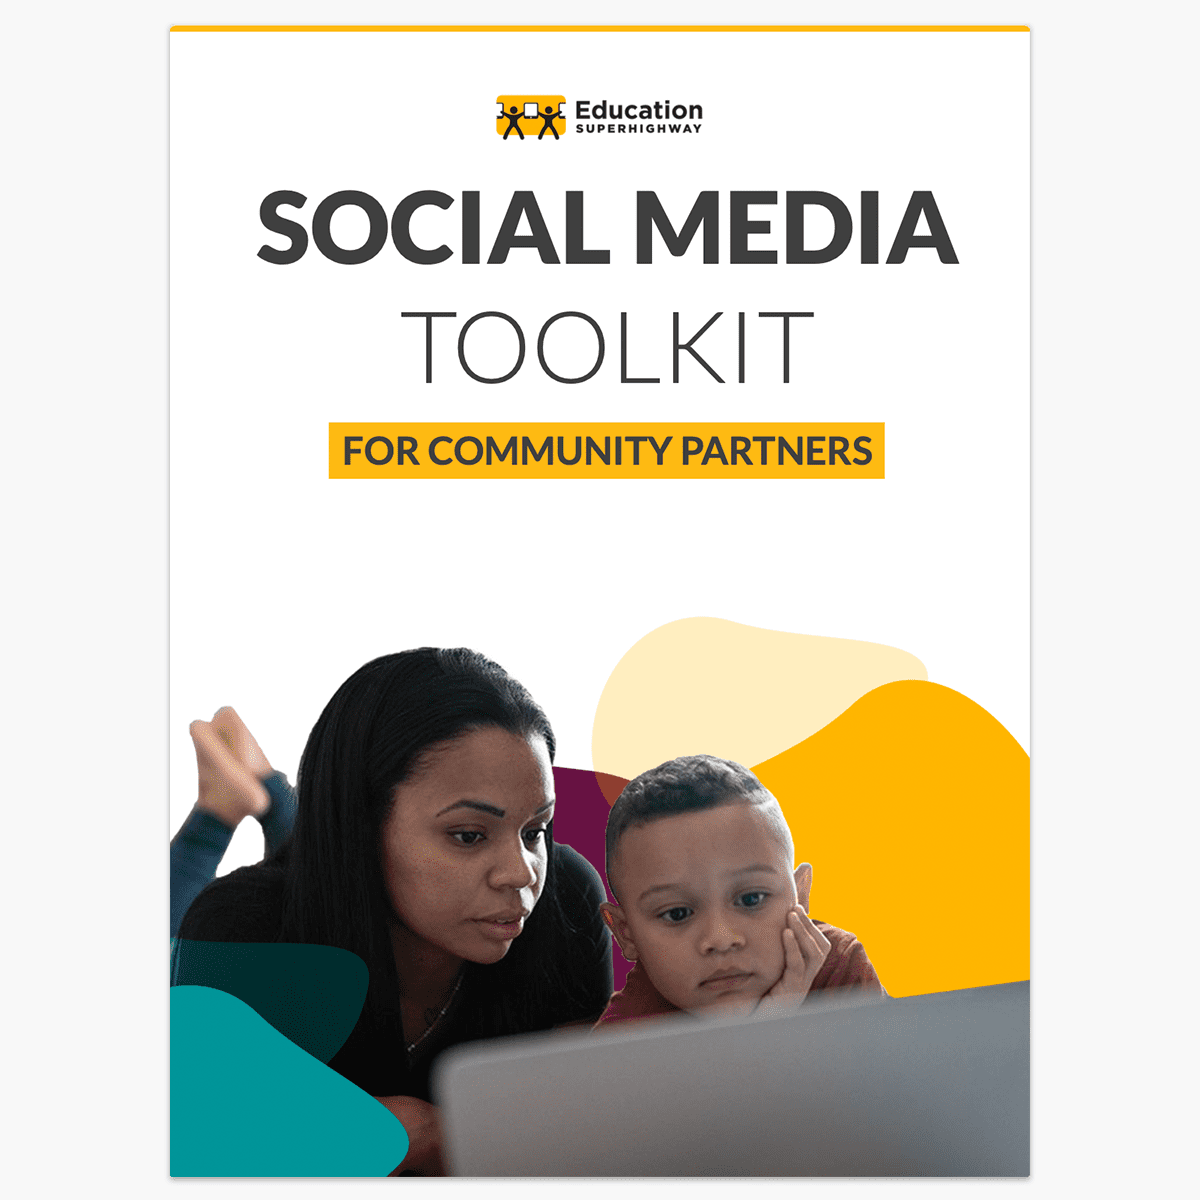 Cover Image for Community Partner Social Media Toolkit